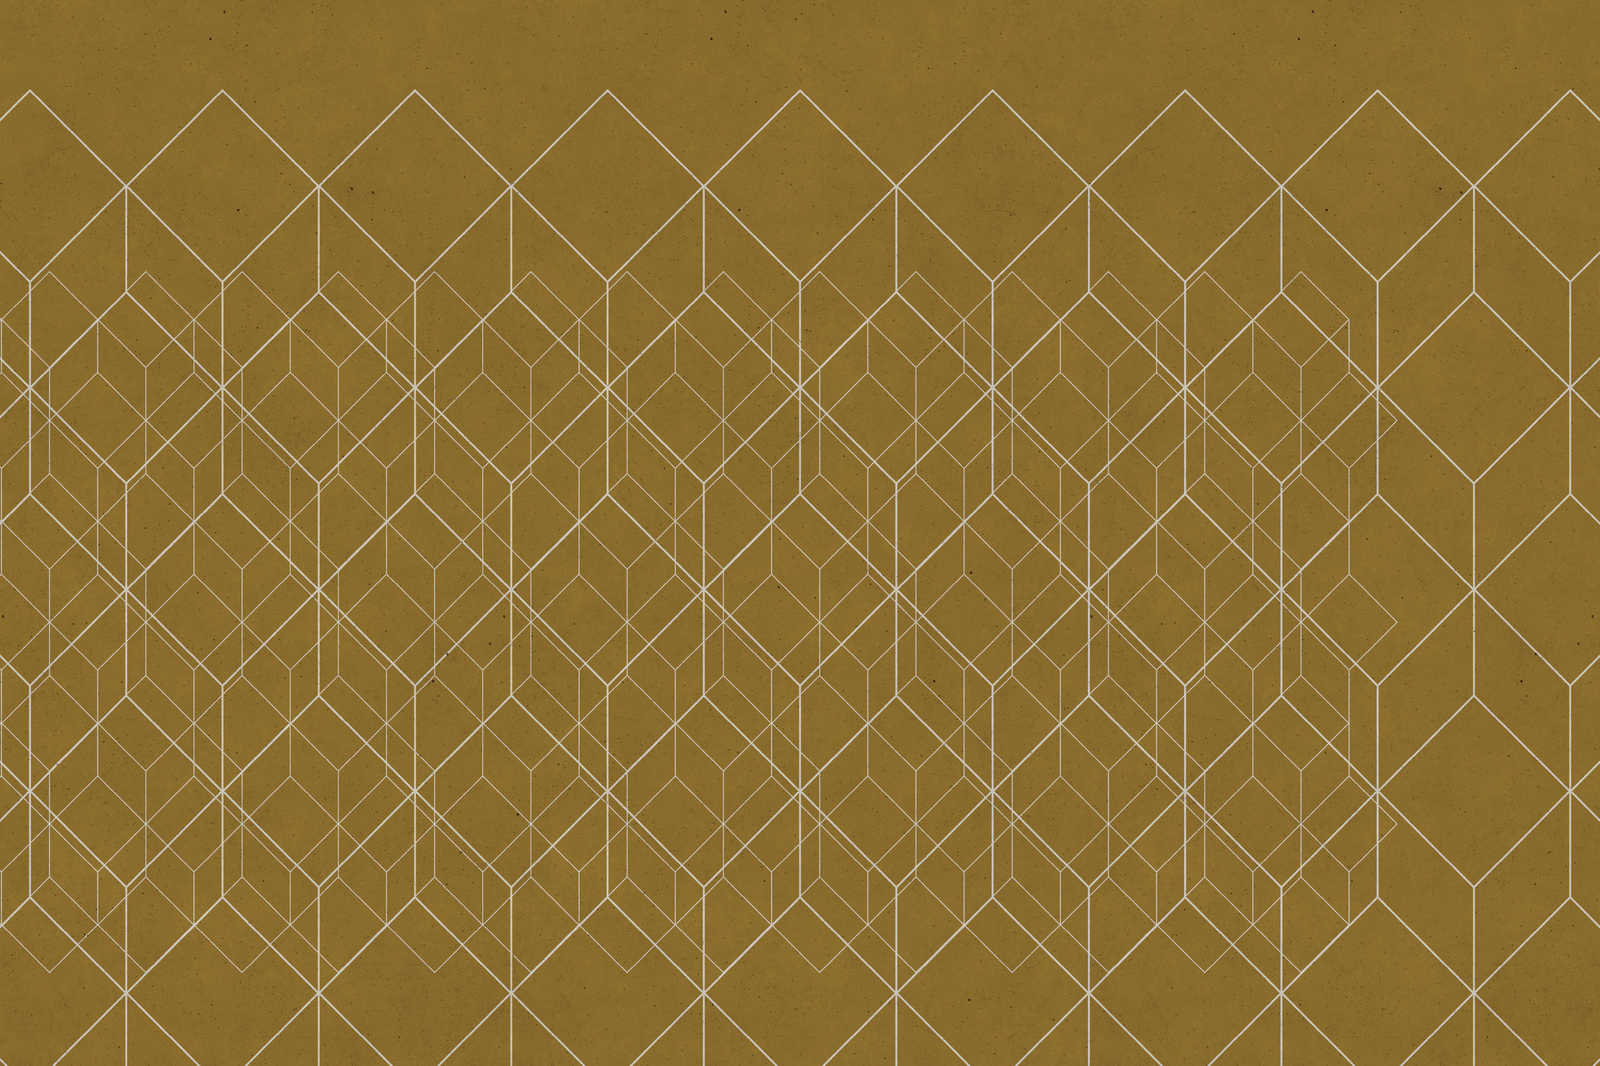             Canvas painting geometric pattern - 1,20 m x 0,80 m
        